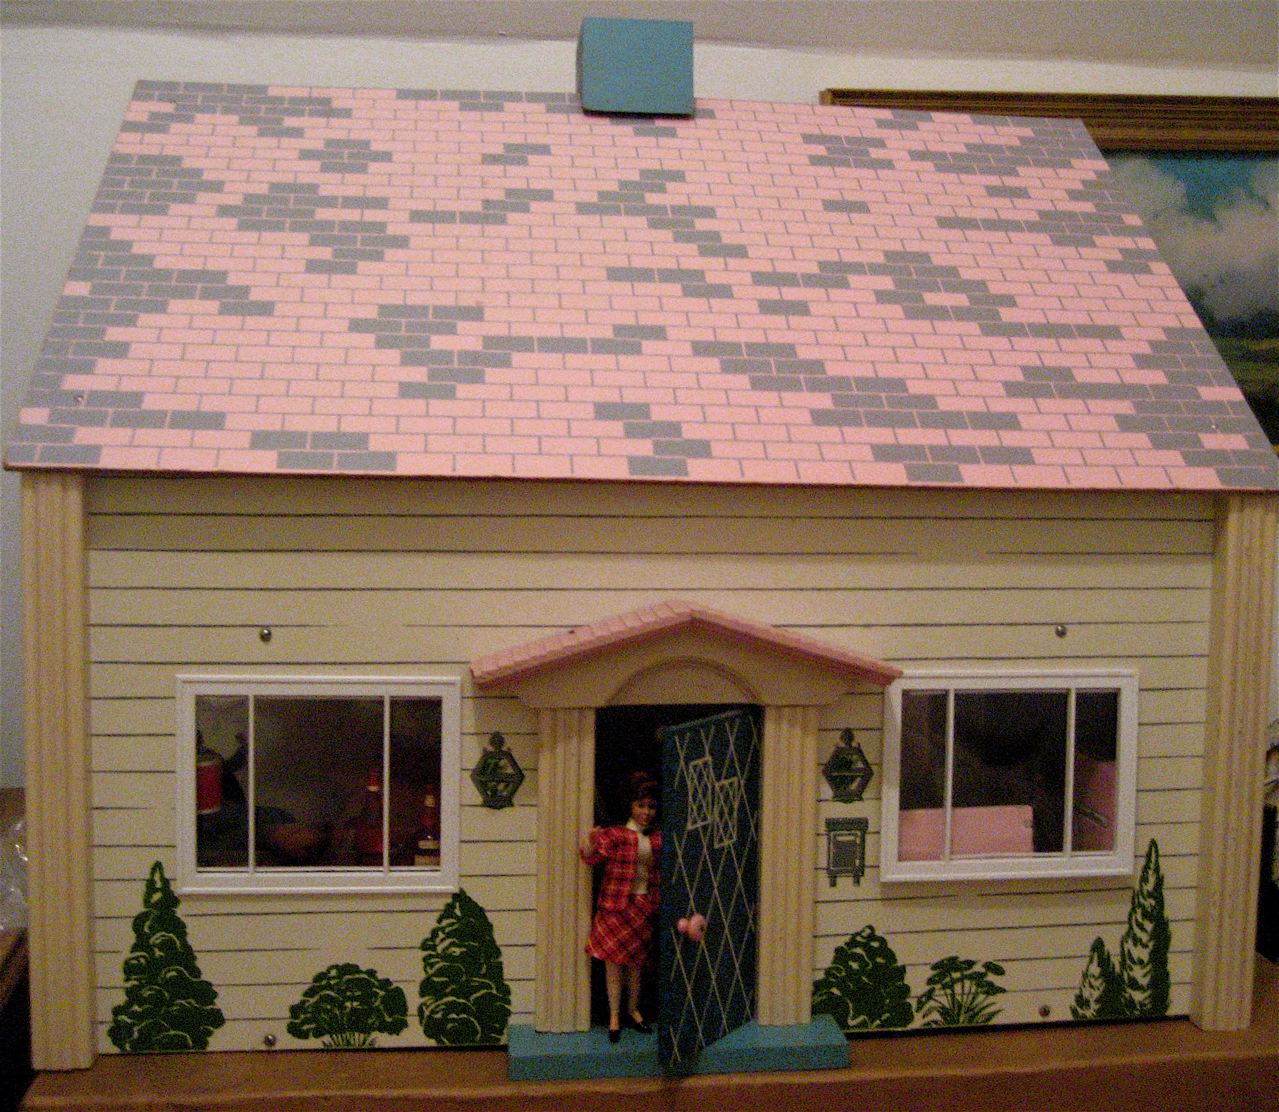 Susan's Mini Homes: Cape Cod houses, candy-coloured Cape Cod houses